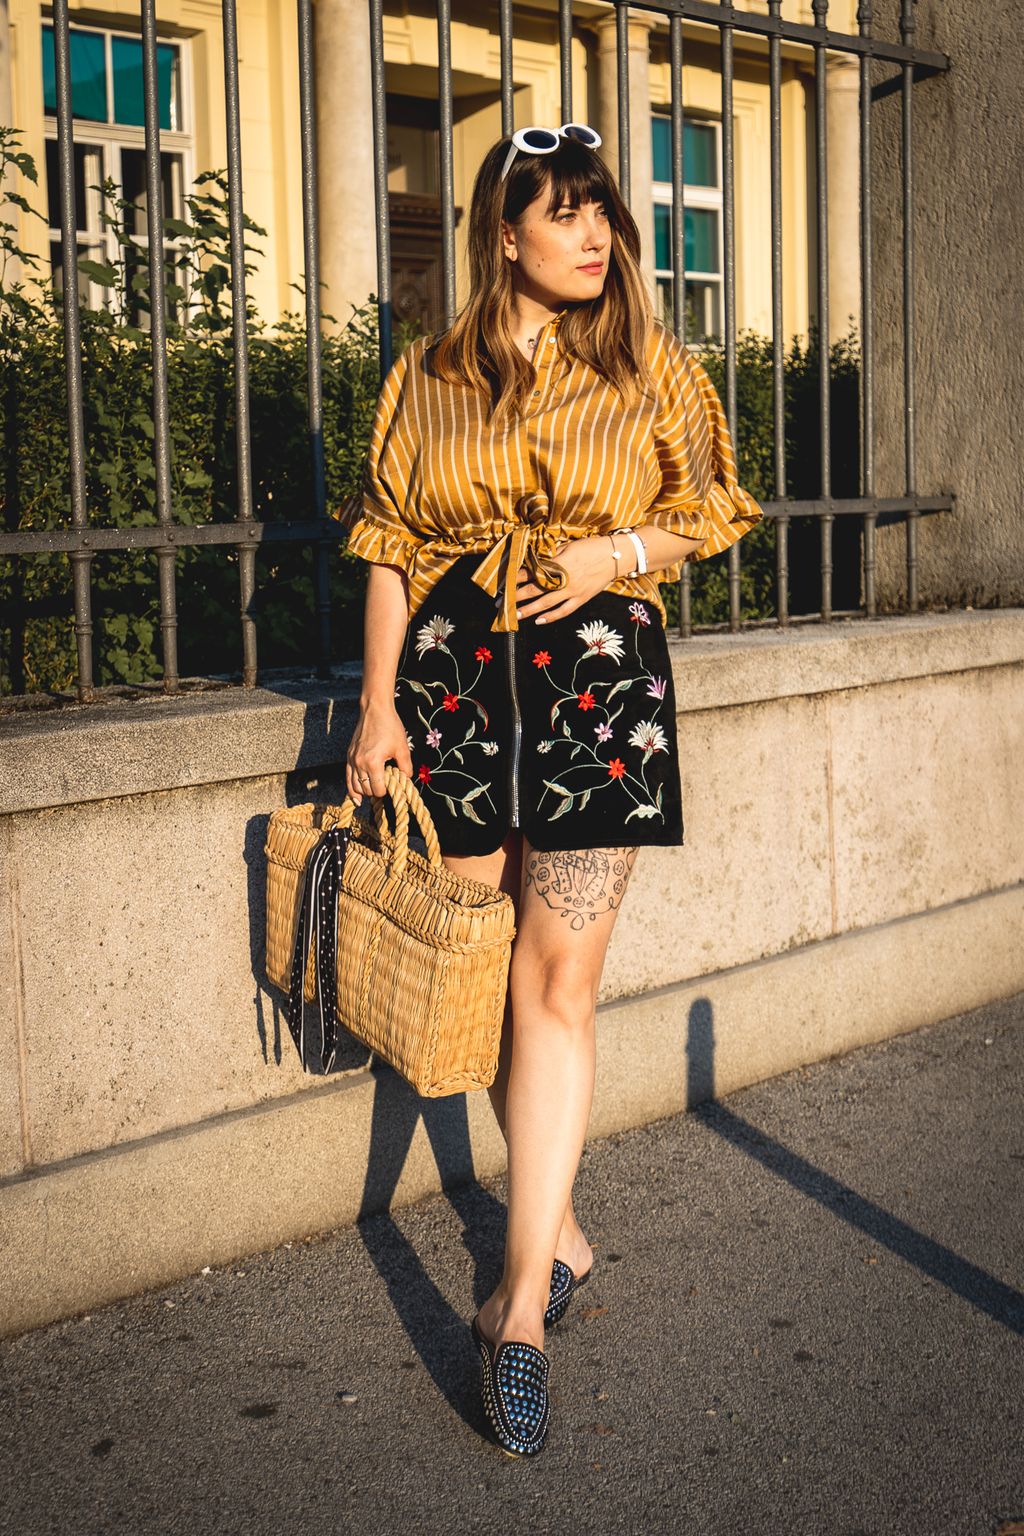 Željka Molnar, stilistica i vlasnica Instagram profila Lia Stazia